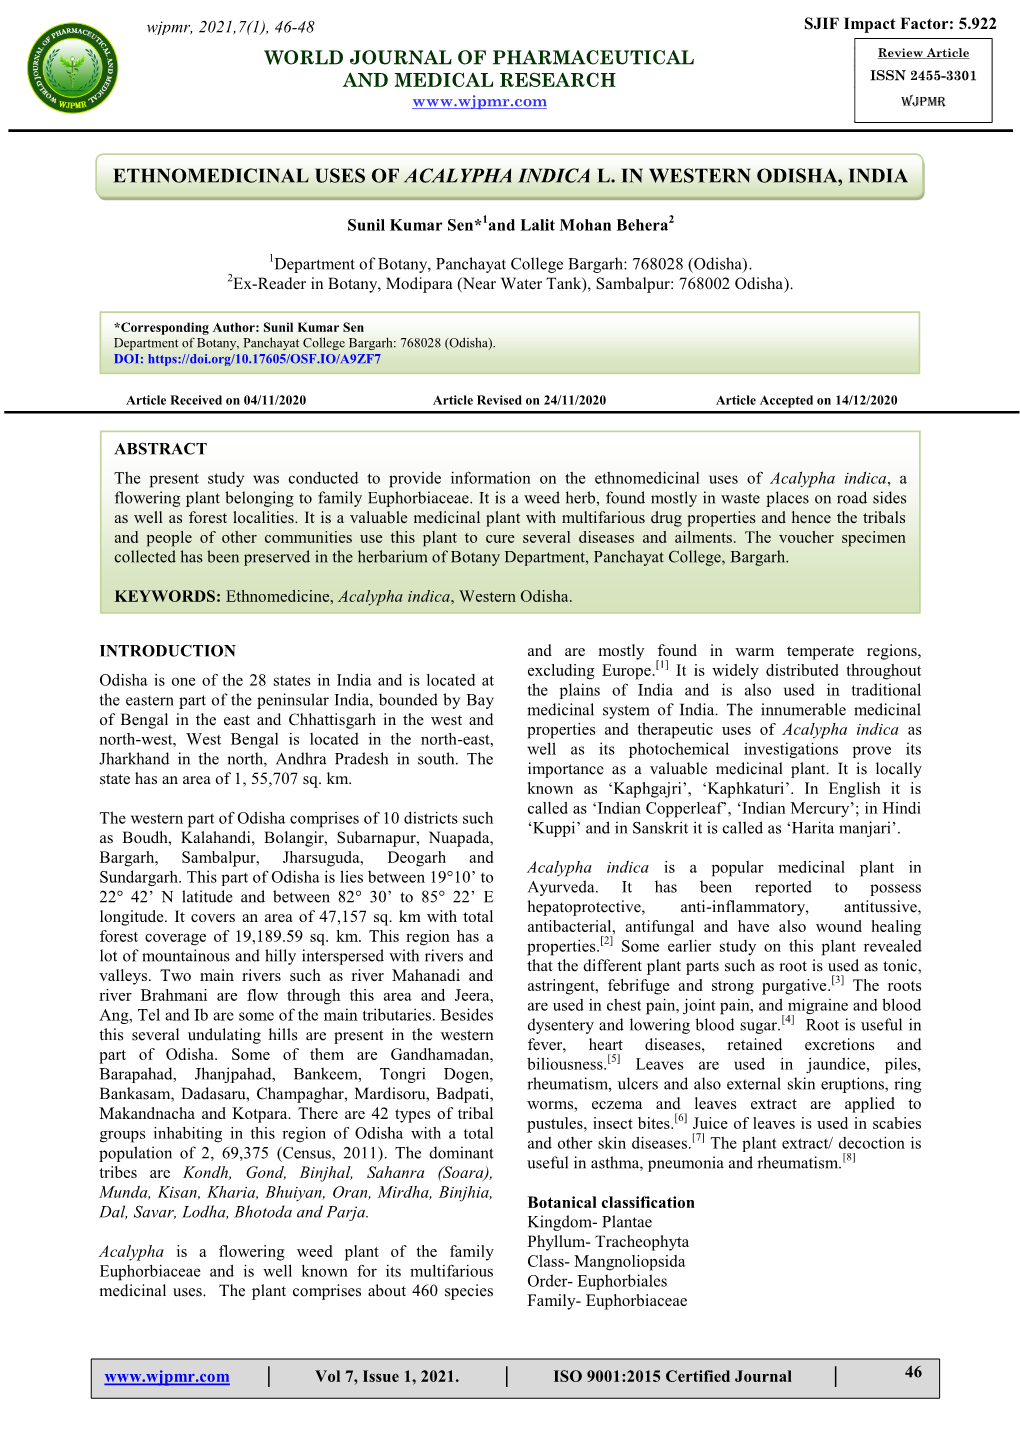 Ethnomedicinal Uses of Acalypha Indica L. in Western Odisha, India